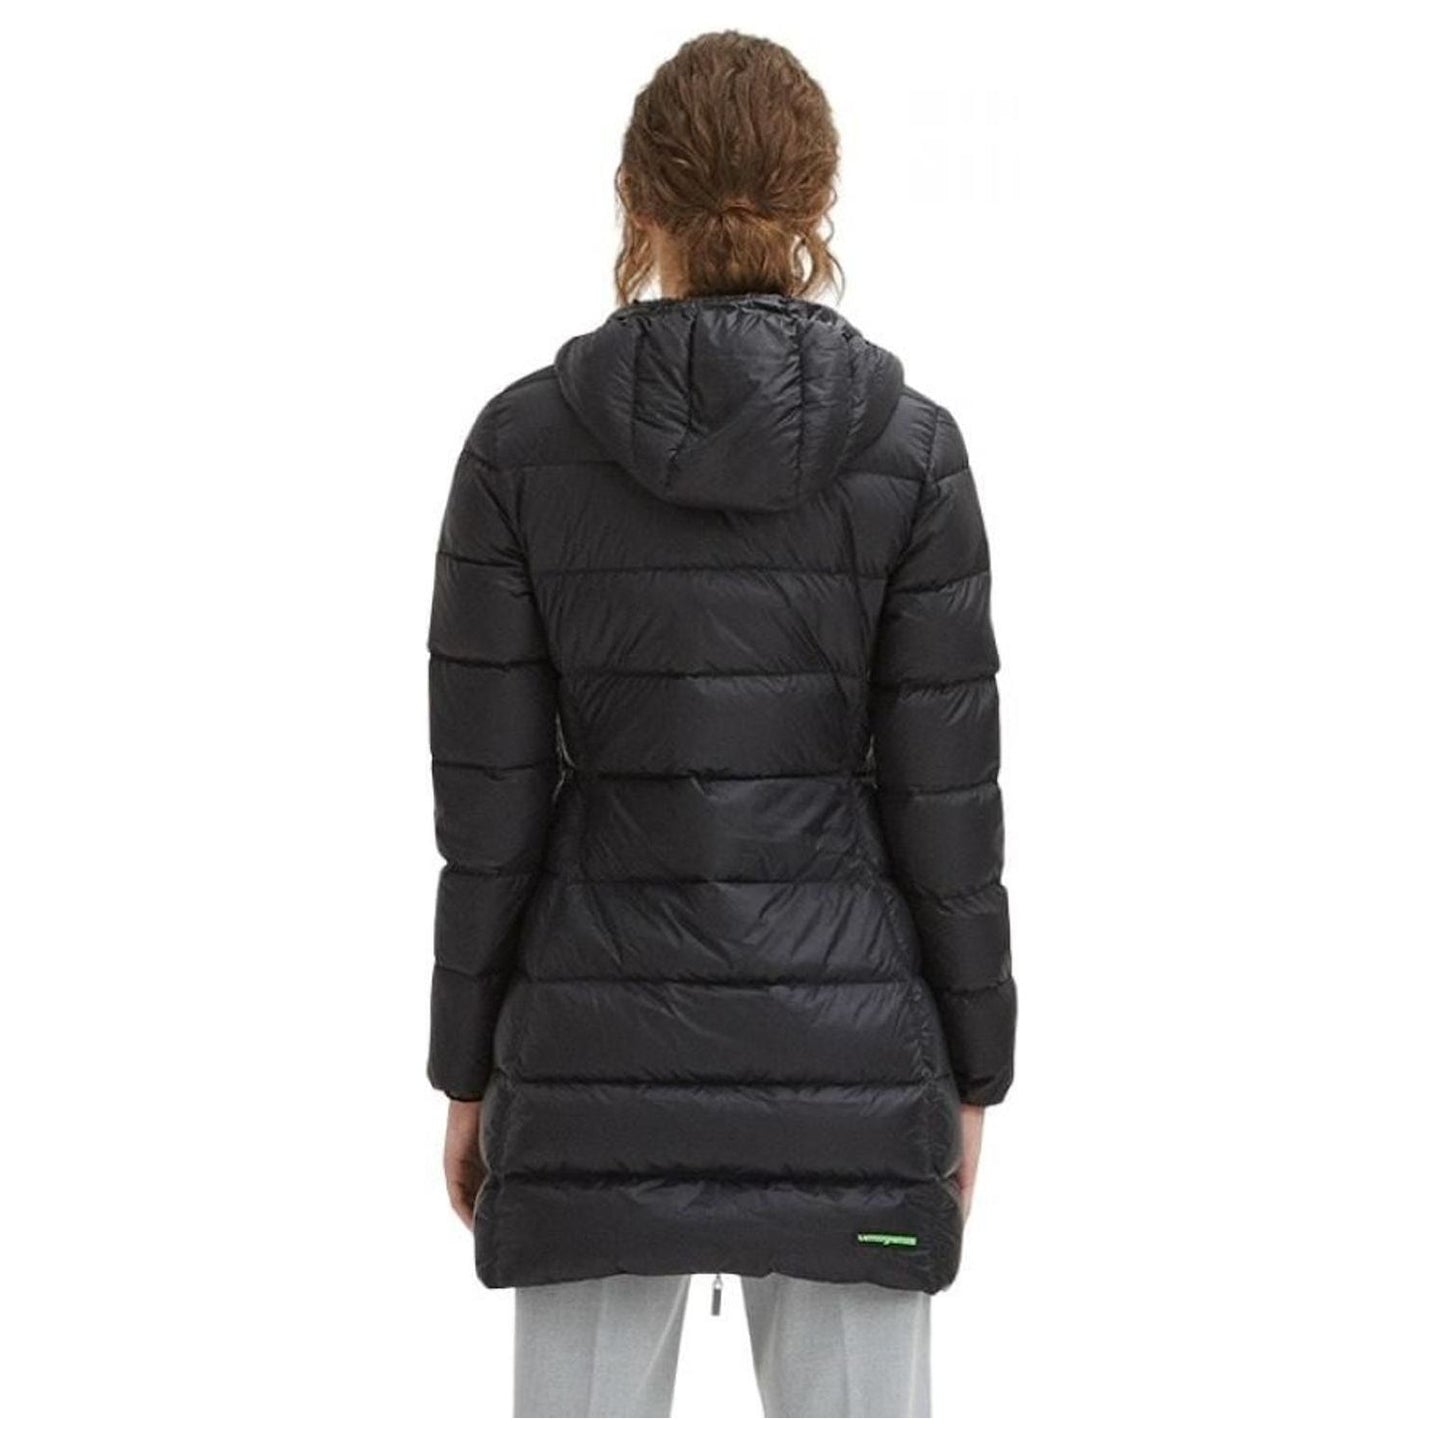 Centogrammi Sleek Nylon Down Jacket with Hood black-nylon-jackets-coat-3 product-8588-1274039008-a9f7cd2d-da6.jpg